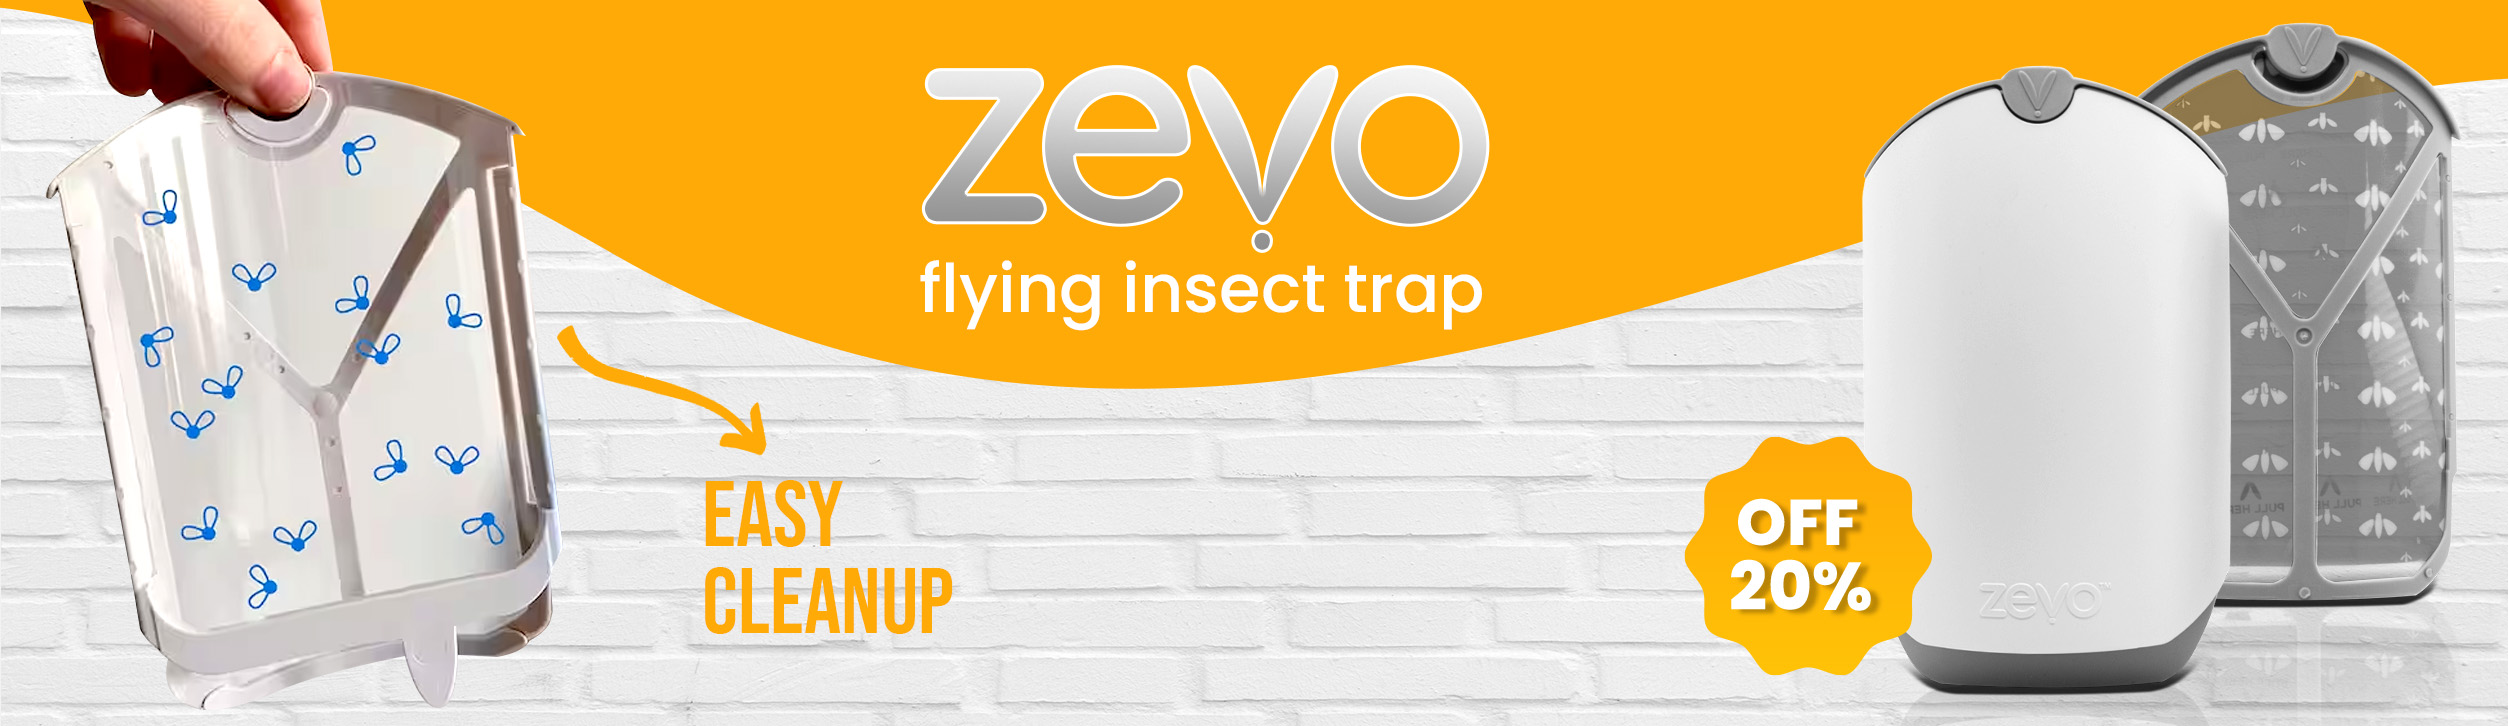 zevo New banner 1